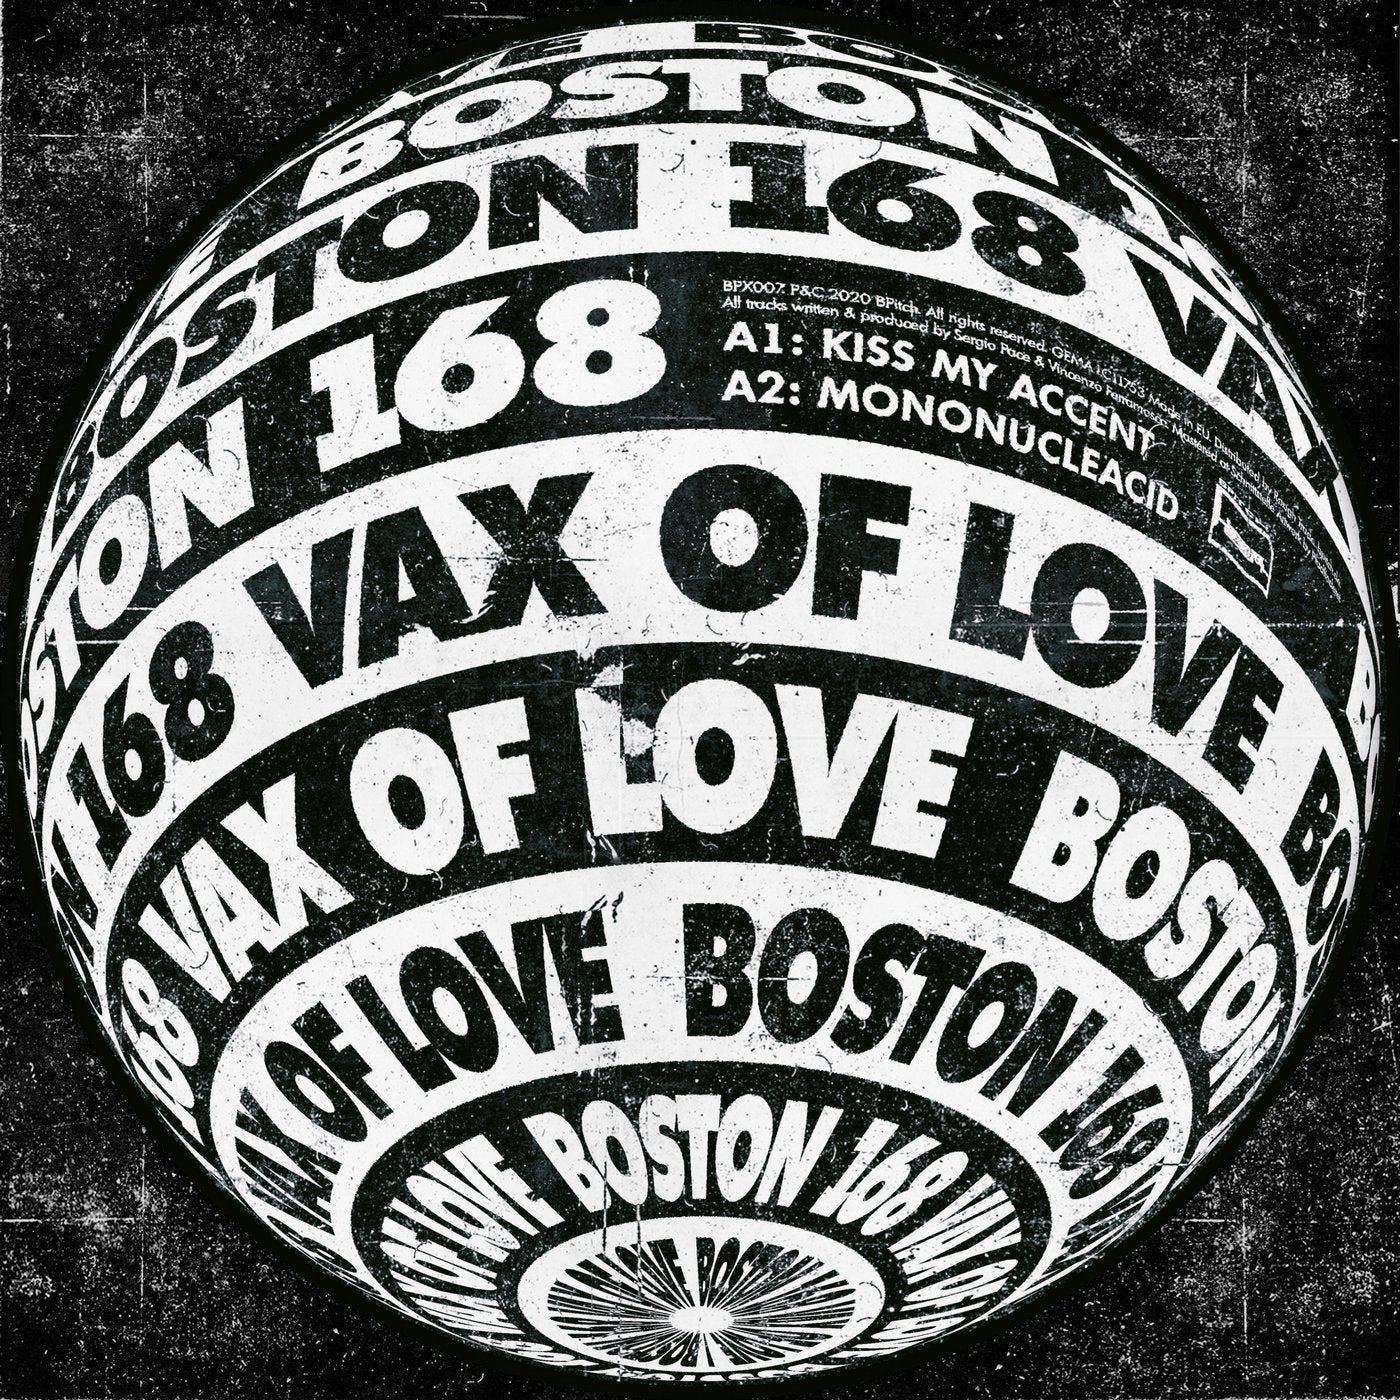 Vax Of Love